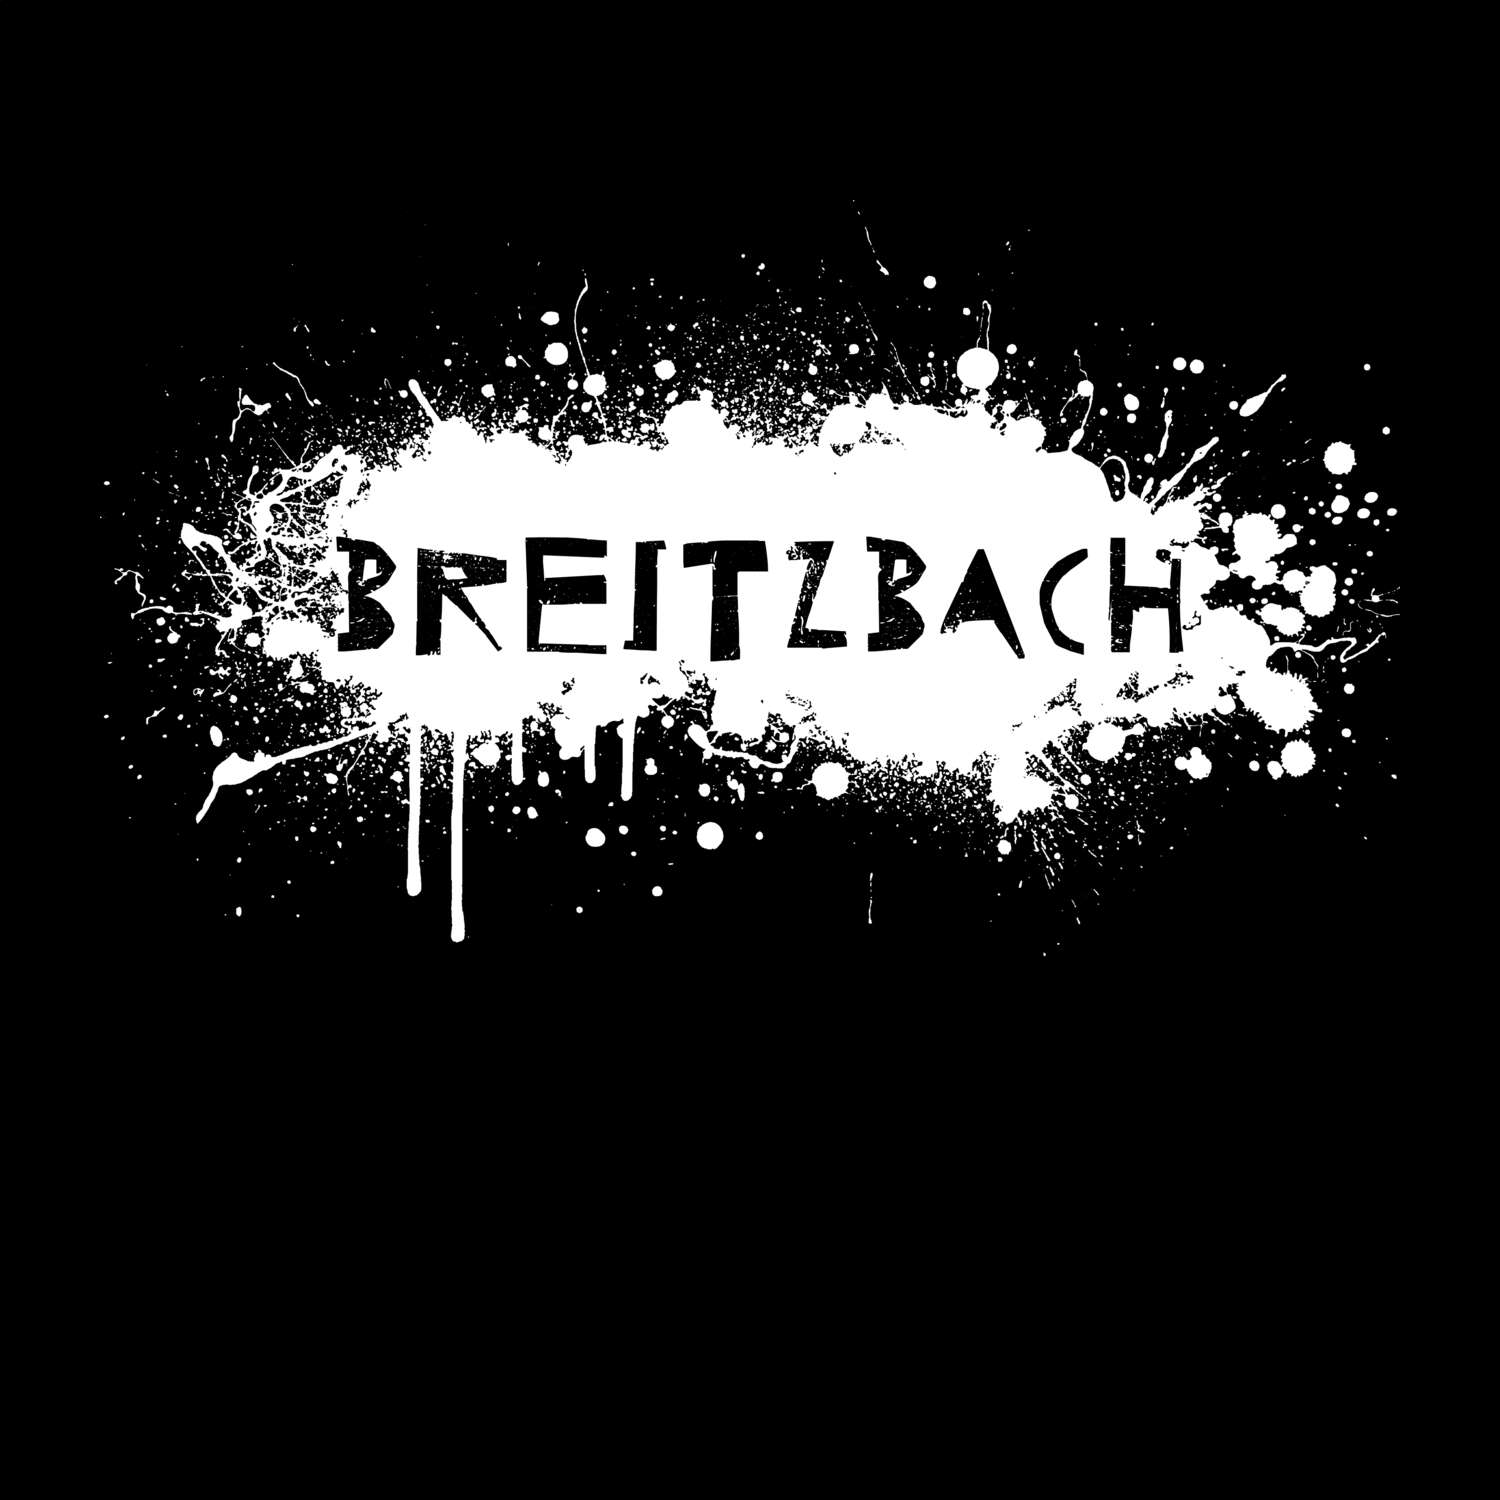 Breitzbach T-Shirt »Paint Splash Punk«